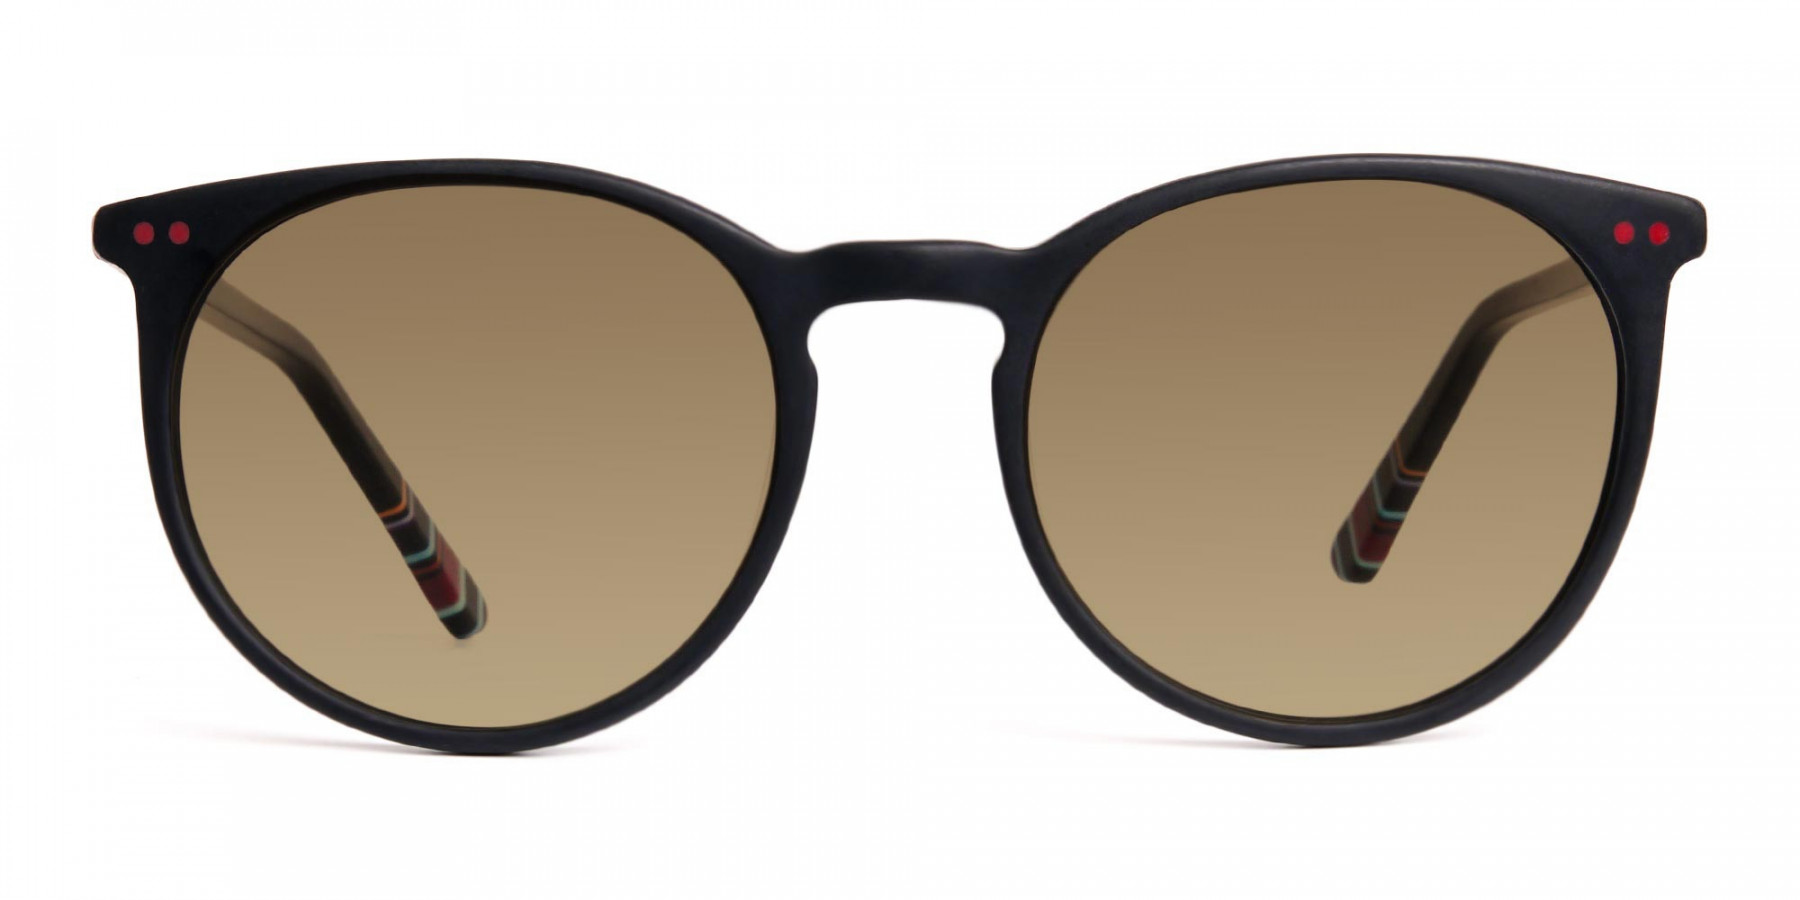 matte-black-designer-round-brown-tinted-sunglasses-frames-1